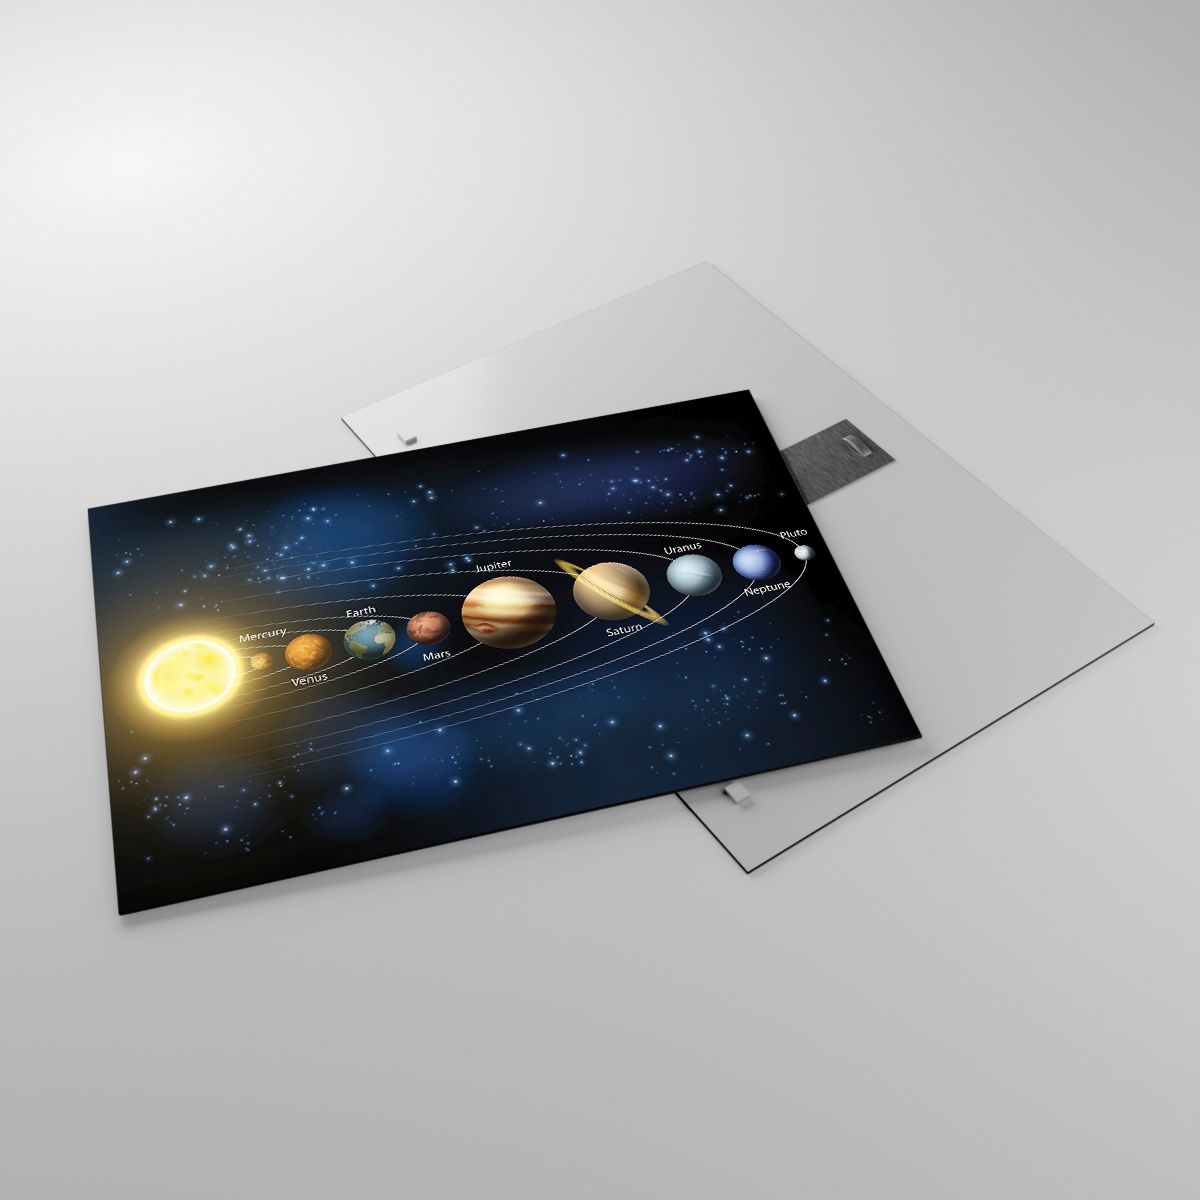 Glasbild Kosmos, Glasbild Galaxis, Glasbild Sonnensystem, Glasbild Universum, Glasbild Planet